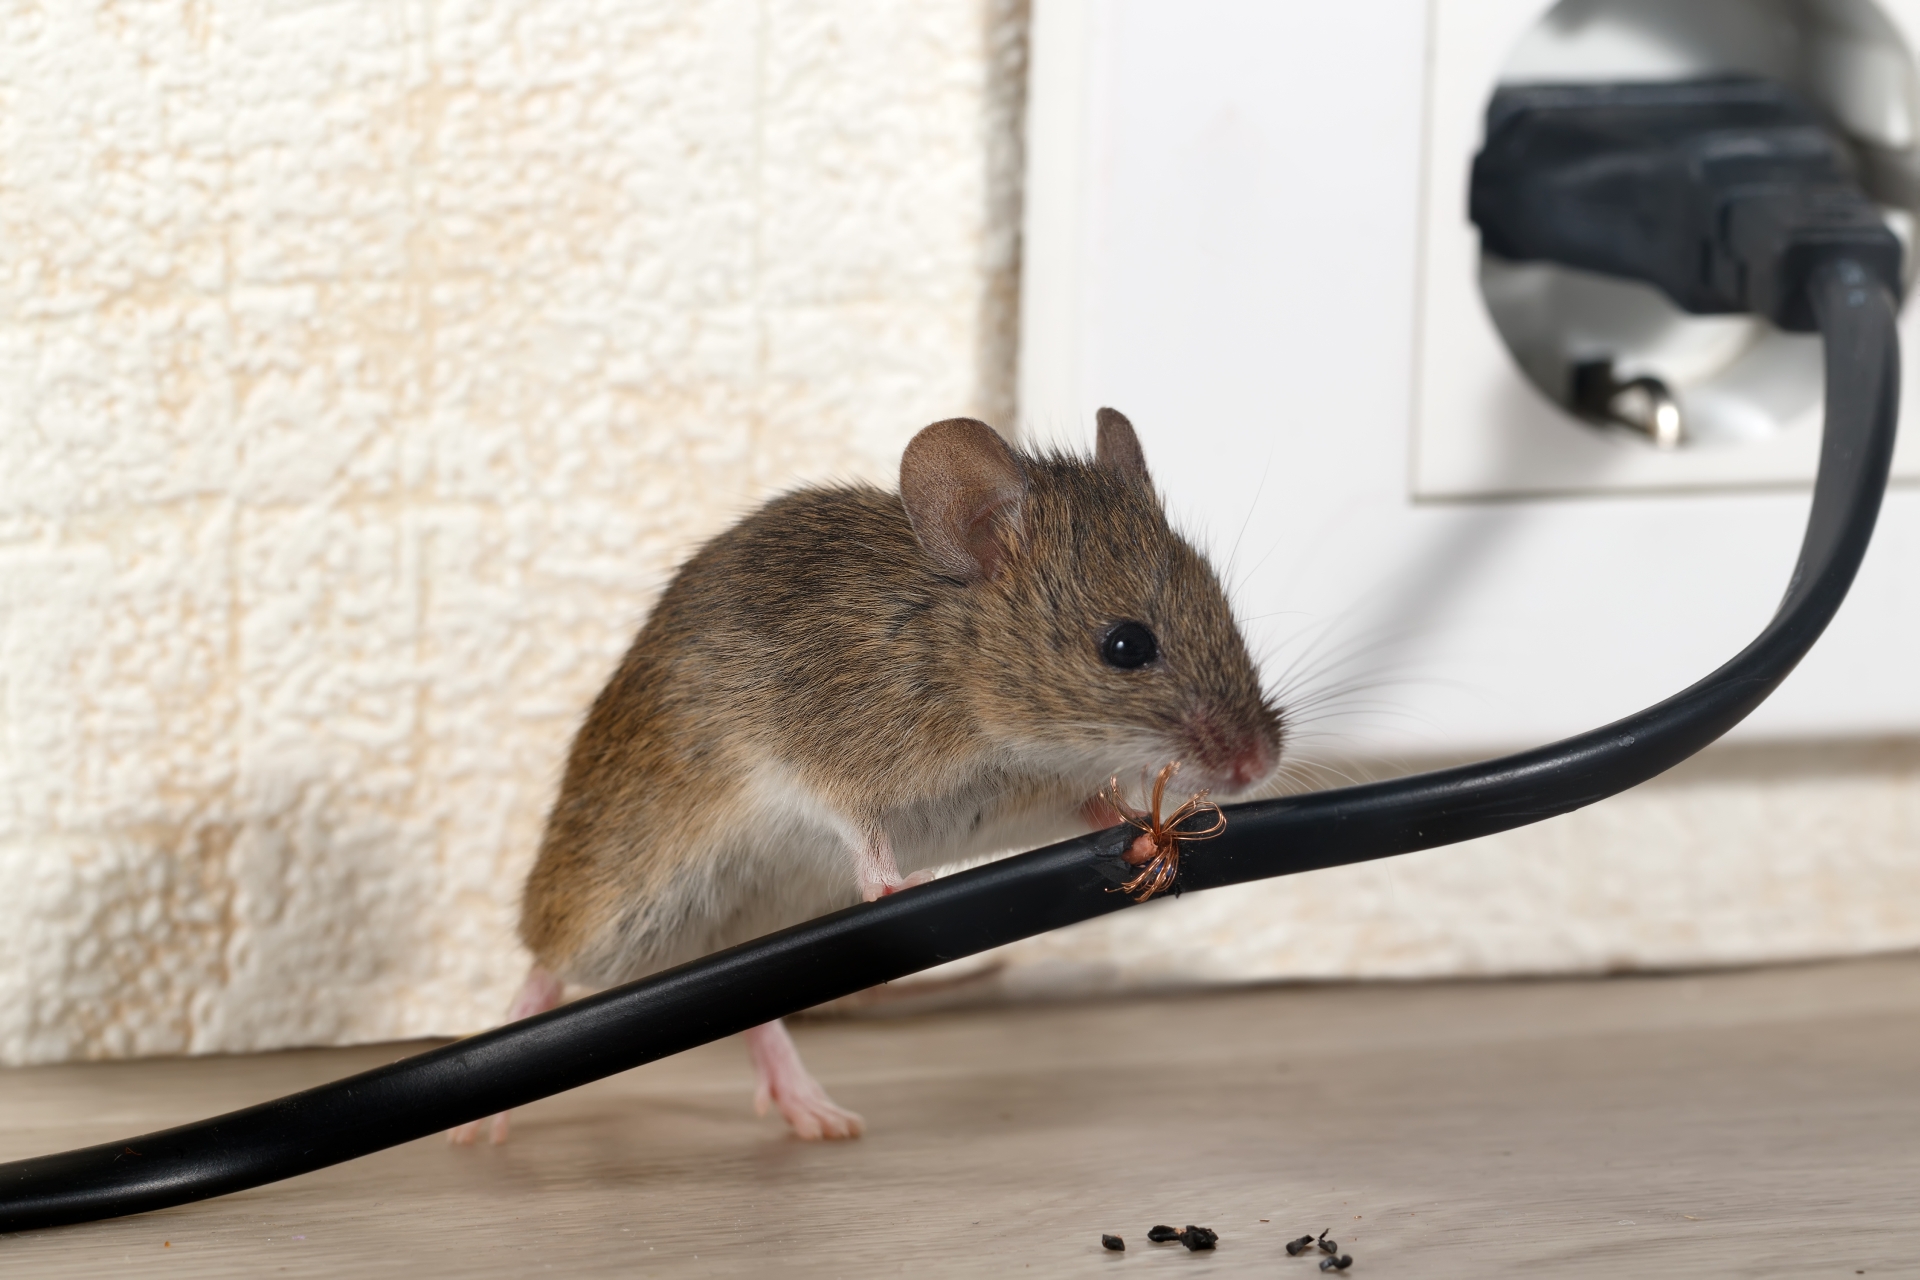 Mice Infestation, Pest Control in Brentford, Kew Bridge, TW8. Call Now 020 8166 9746